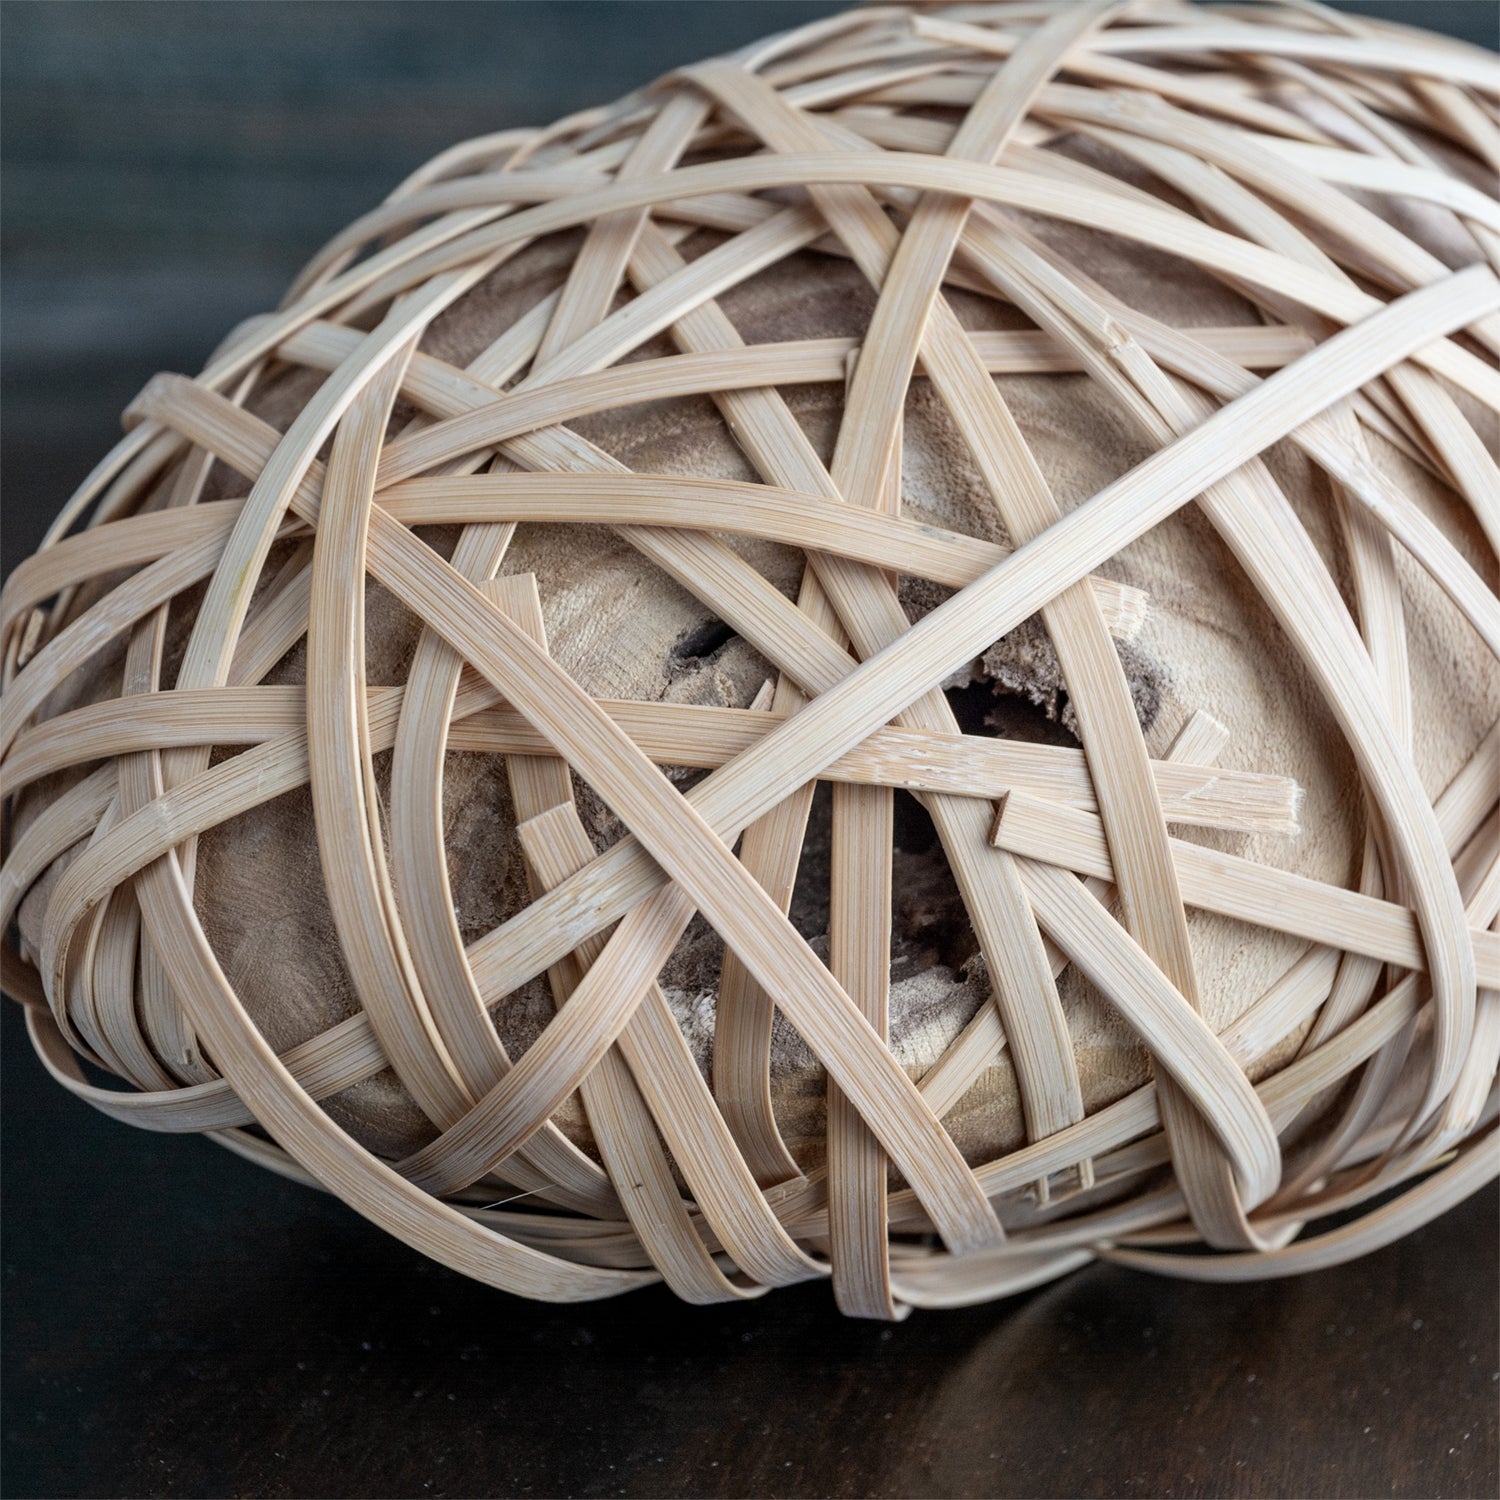 Bamboo & Wood Sculpture, LG